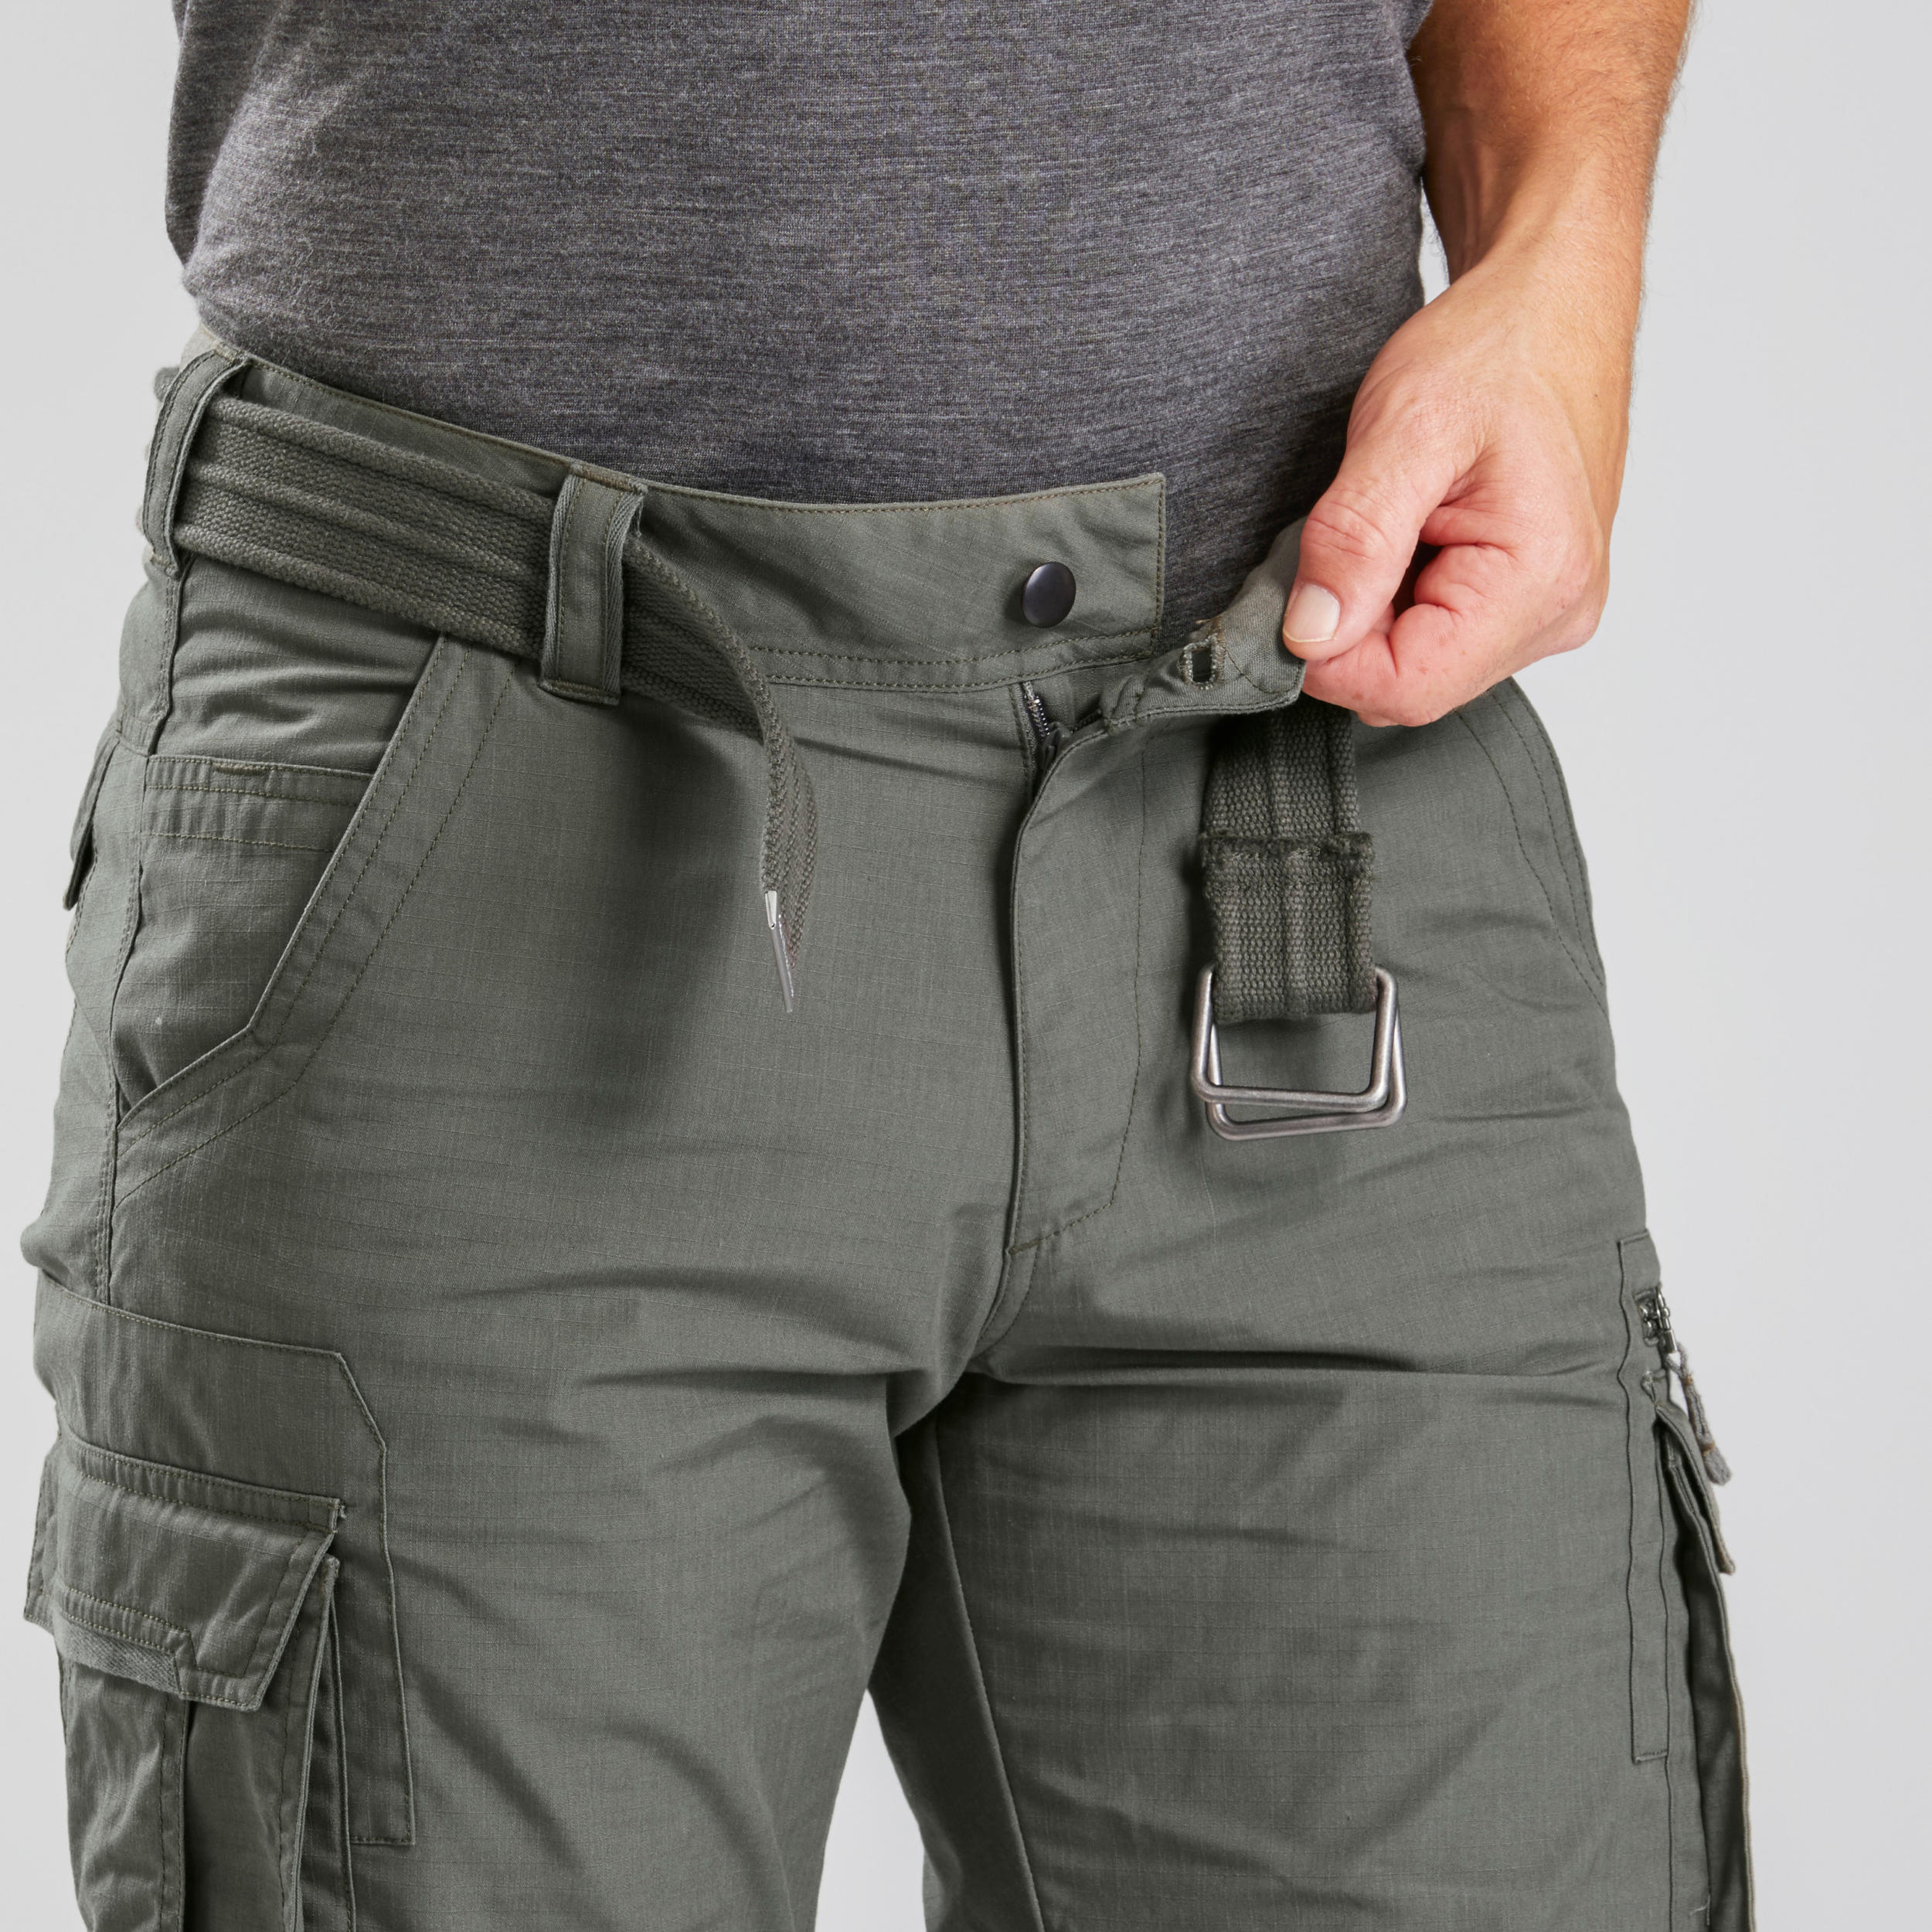 Pantalon convertible homme – Travel 100 kaki - FORCLAZ